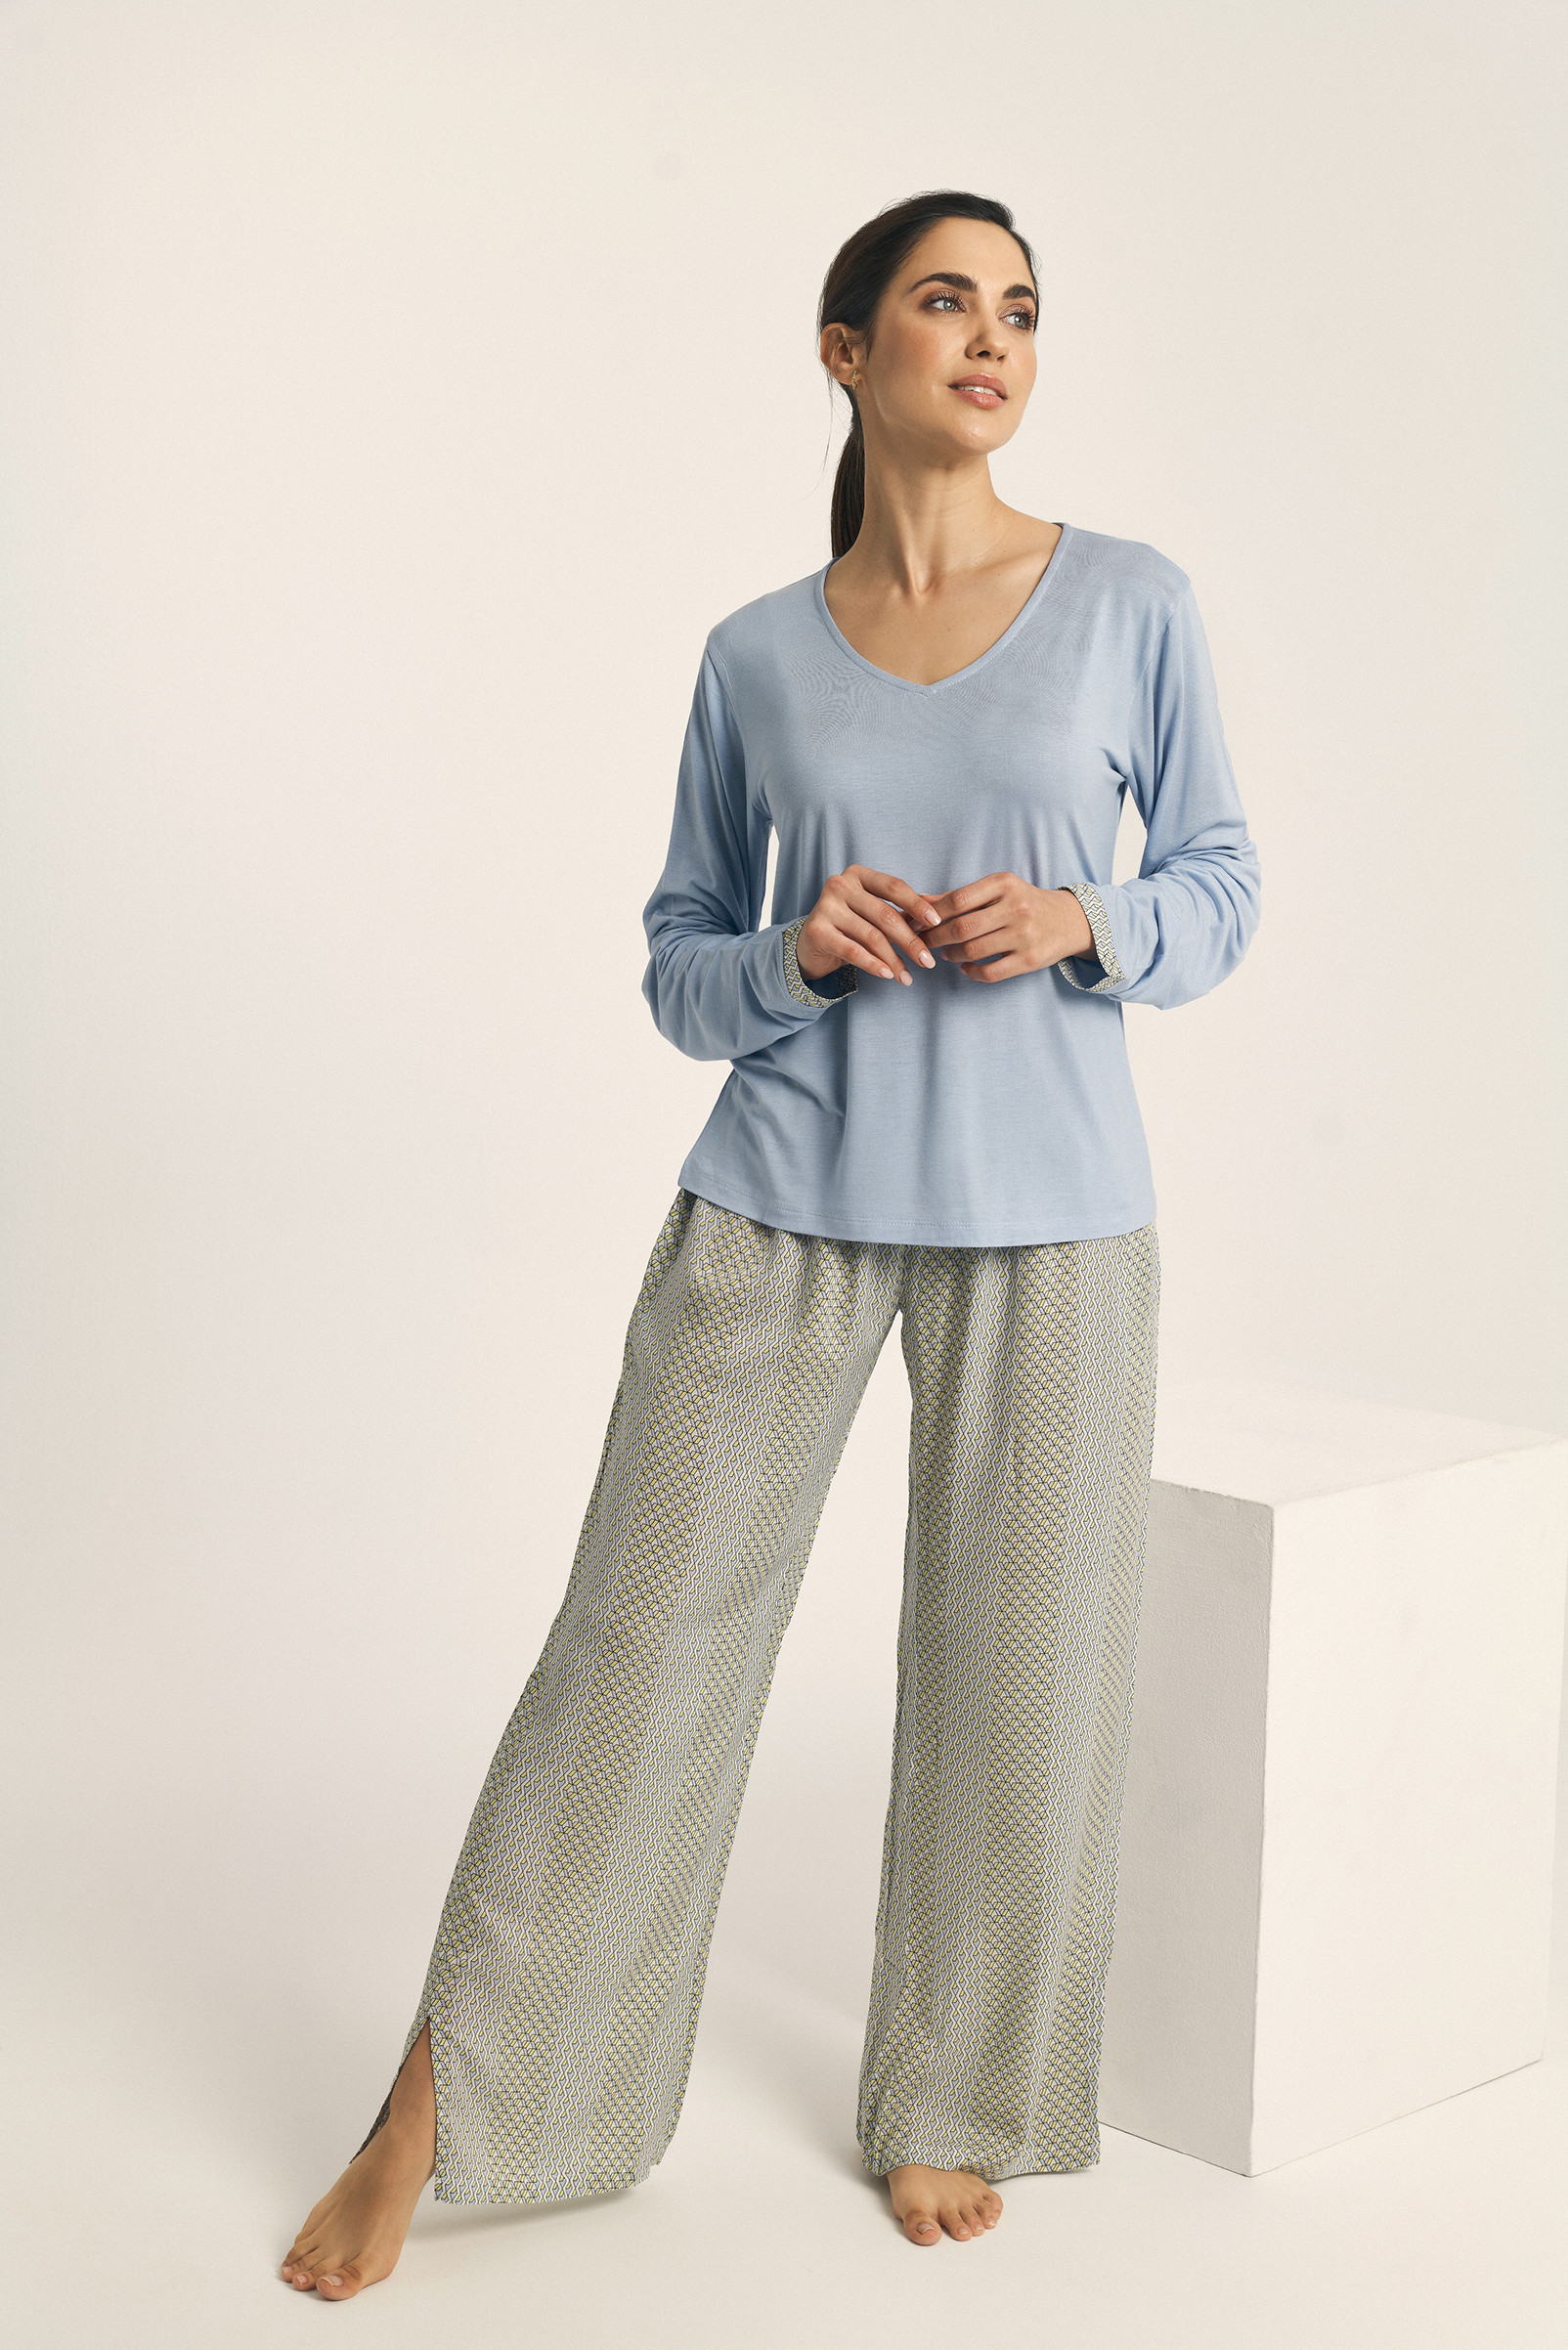 Pijama mujer entretiempo fino de viscosa pantalón largo manga larga